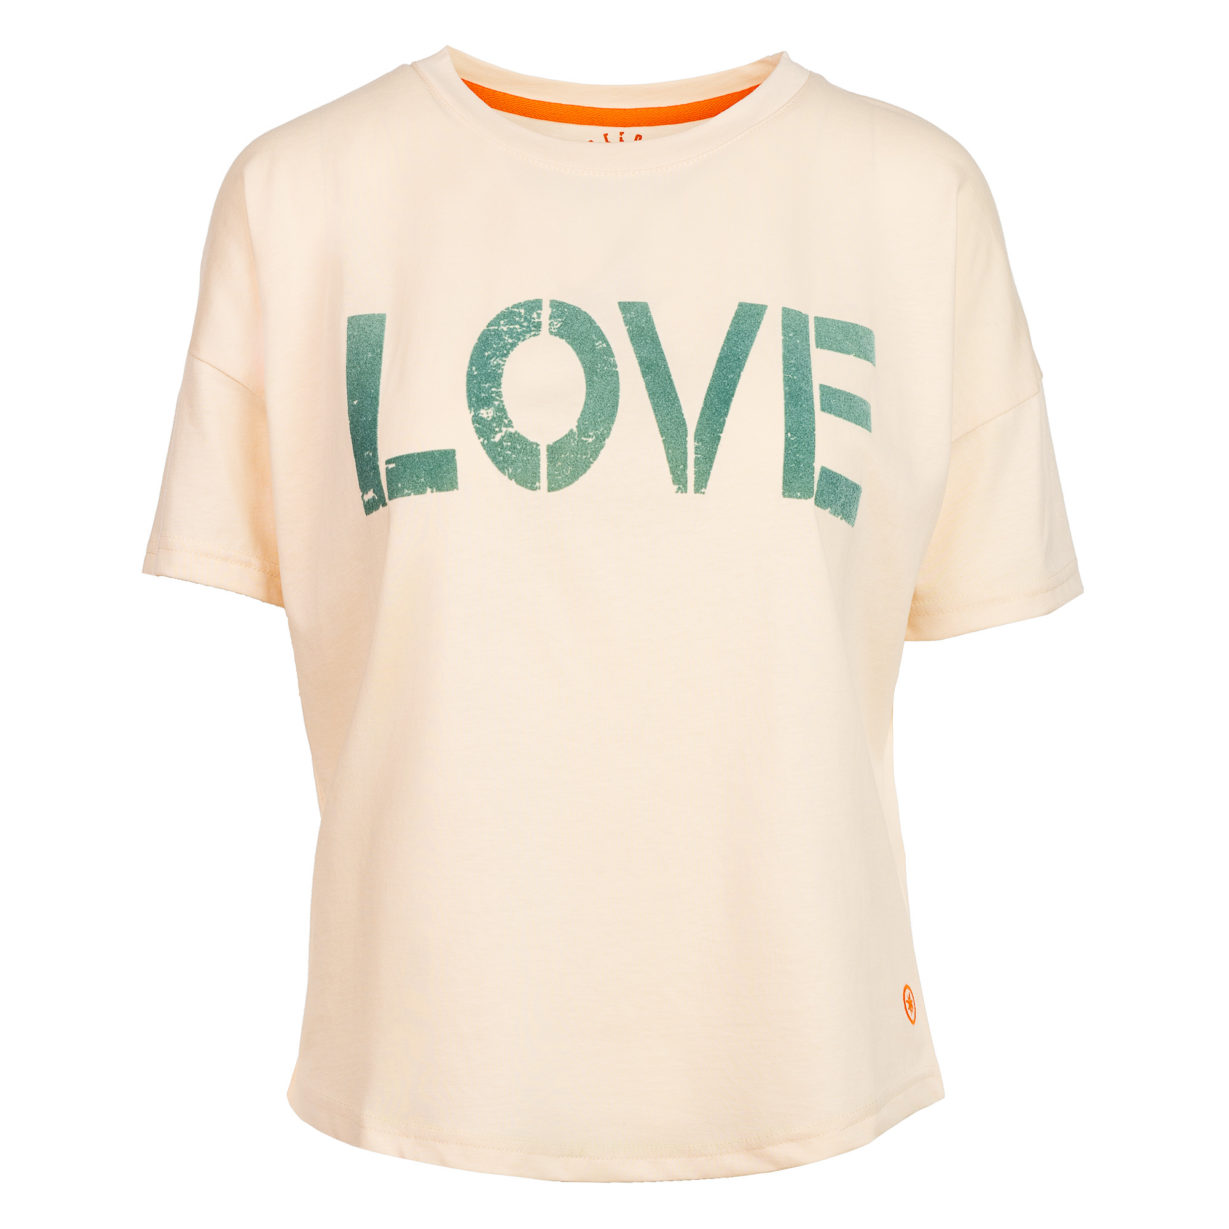 Idske - T-Shirt mit Love Print in Bottlegreen